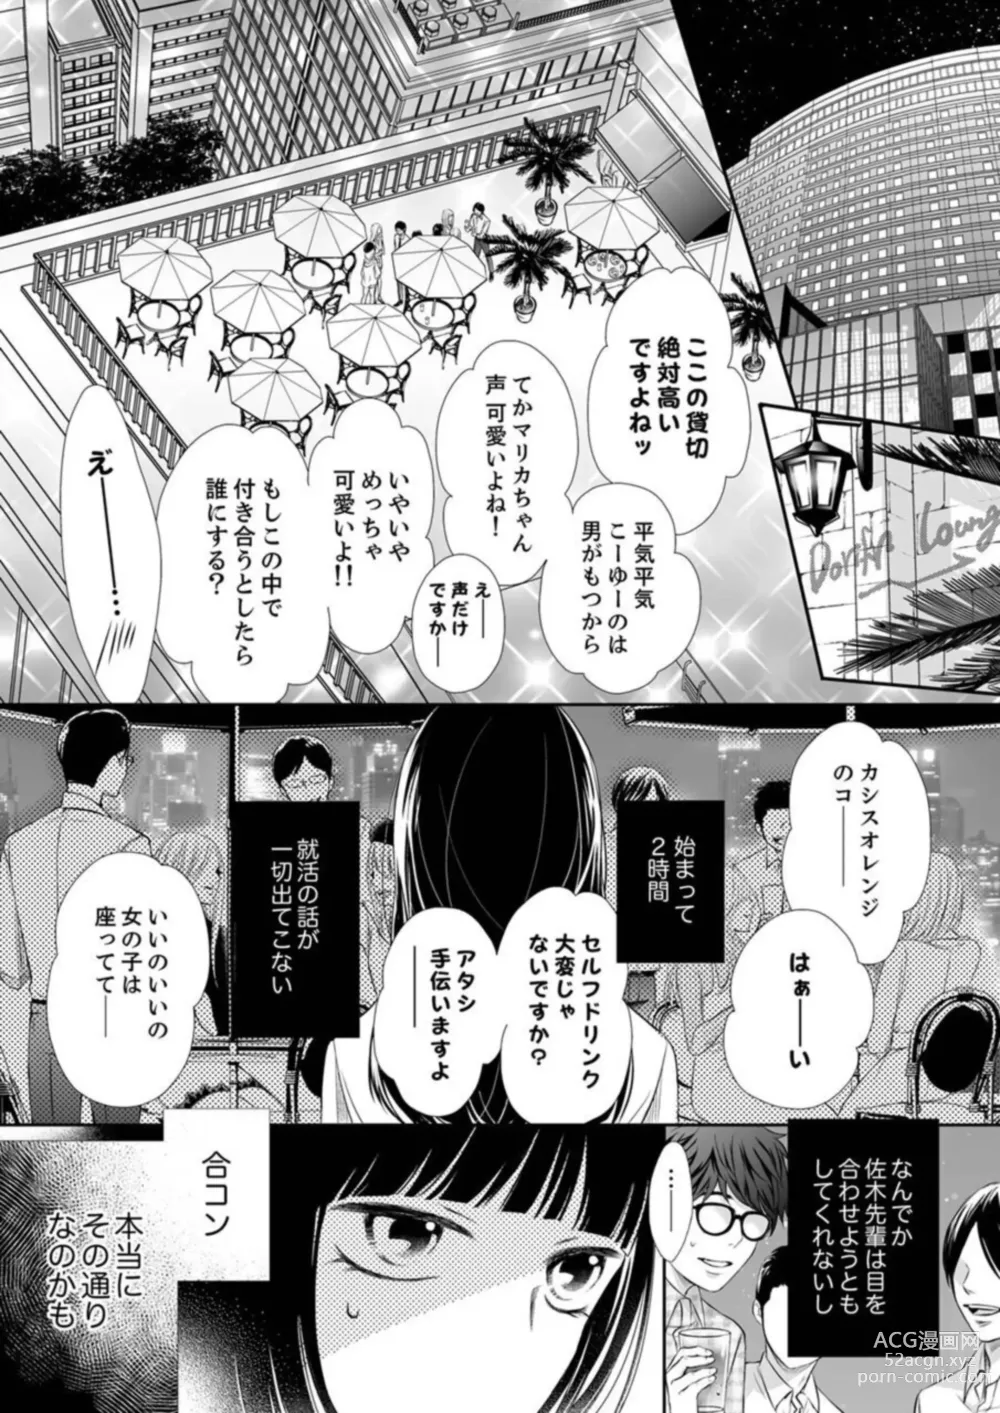 Page 15 of manga Juusei to Aegigoe ~ Uchinuku Tabi ni, Kikasero yo - Gun shot and Panting 1